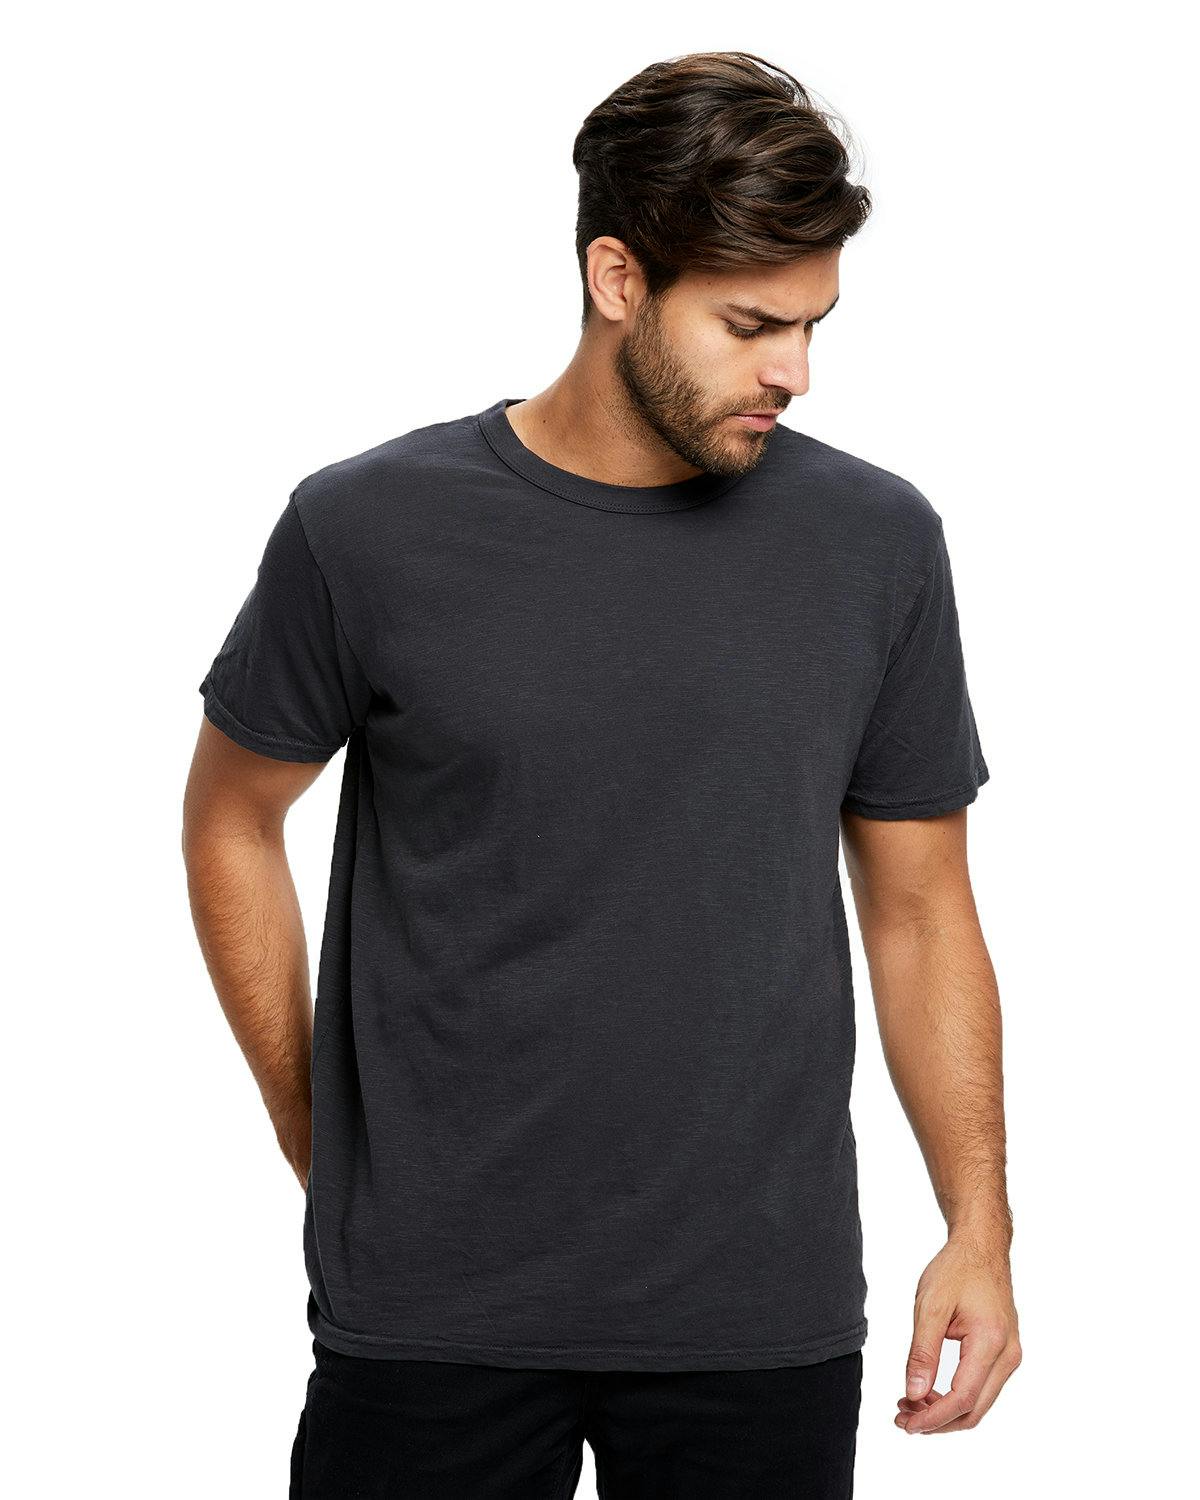 Image for Men's Short-Sleeve Slub Crewneck T-Shirt Garment-Dyed